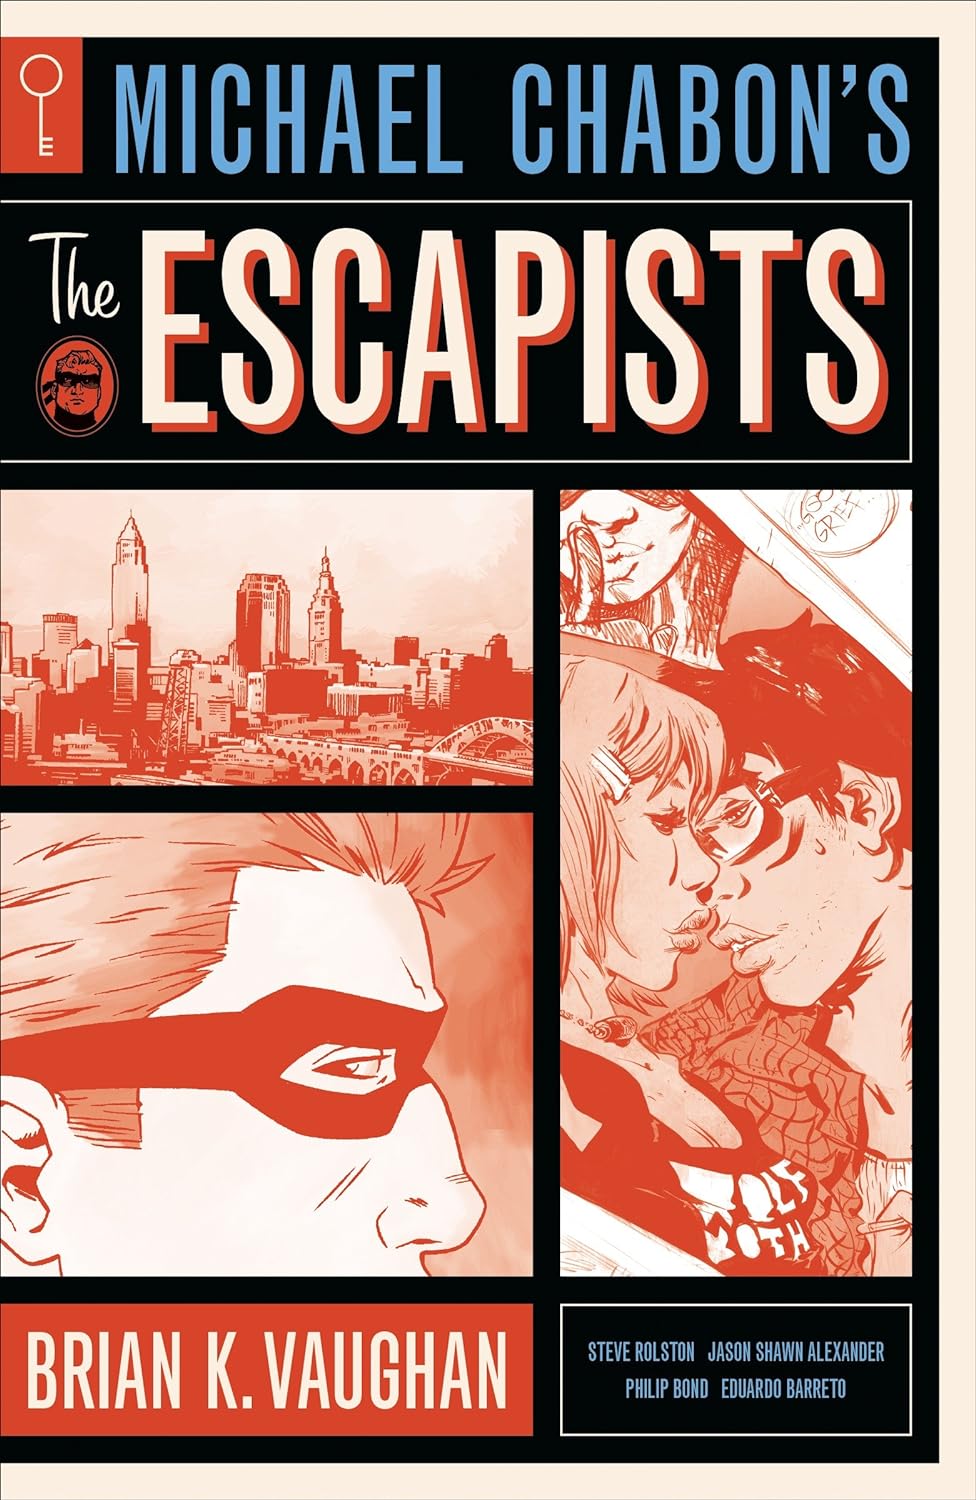 September 2019 -Michael Chabon's The Escapists